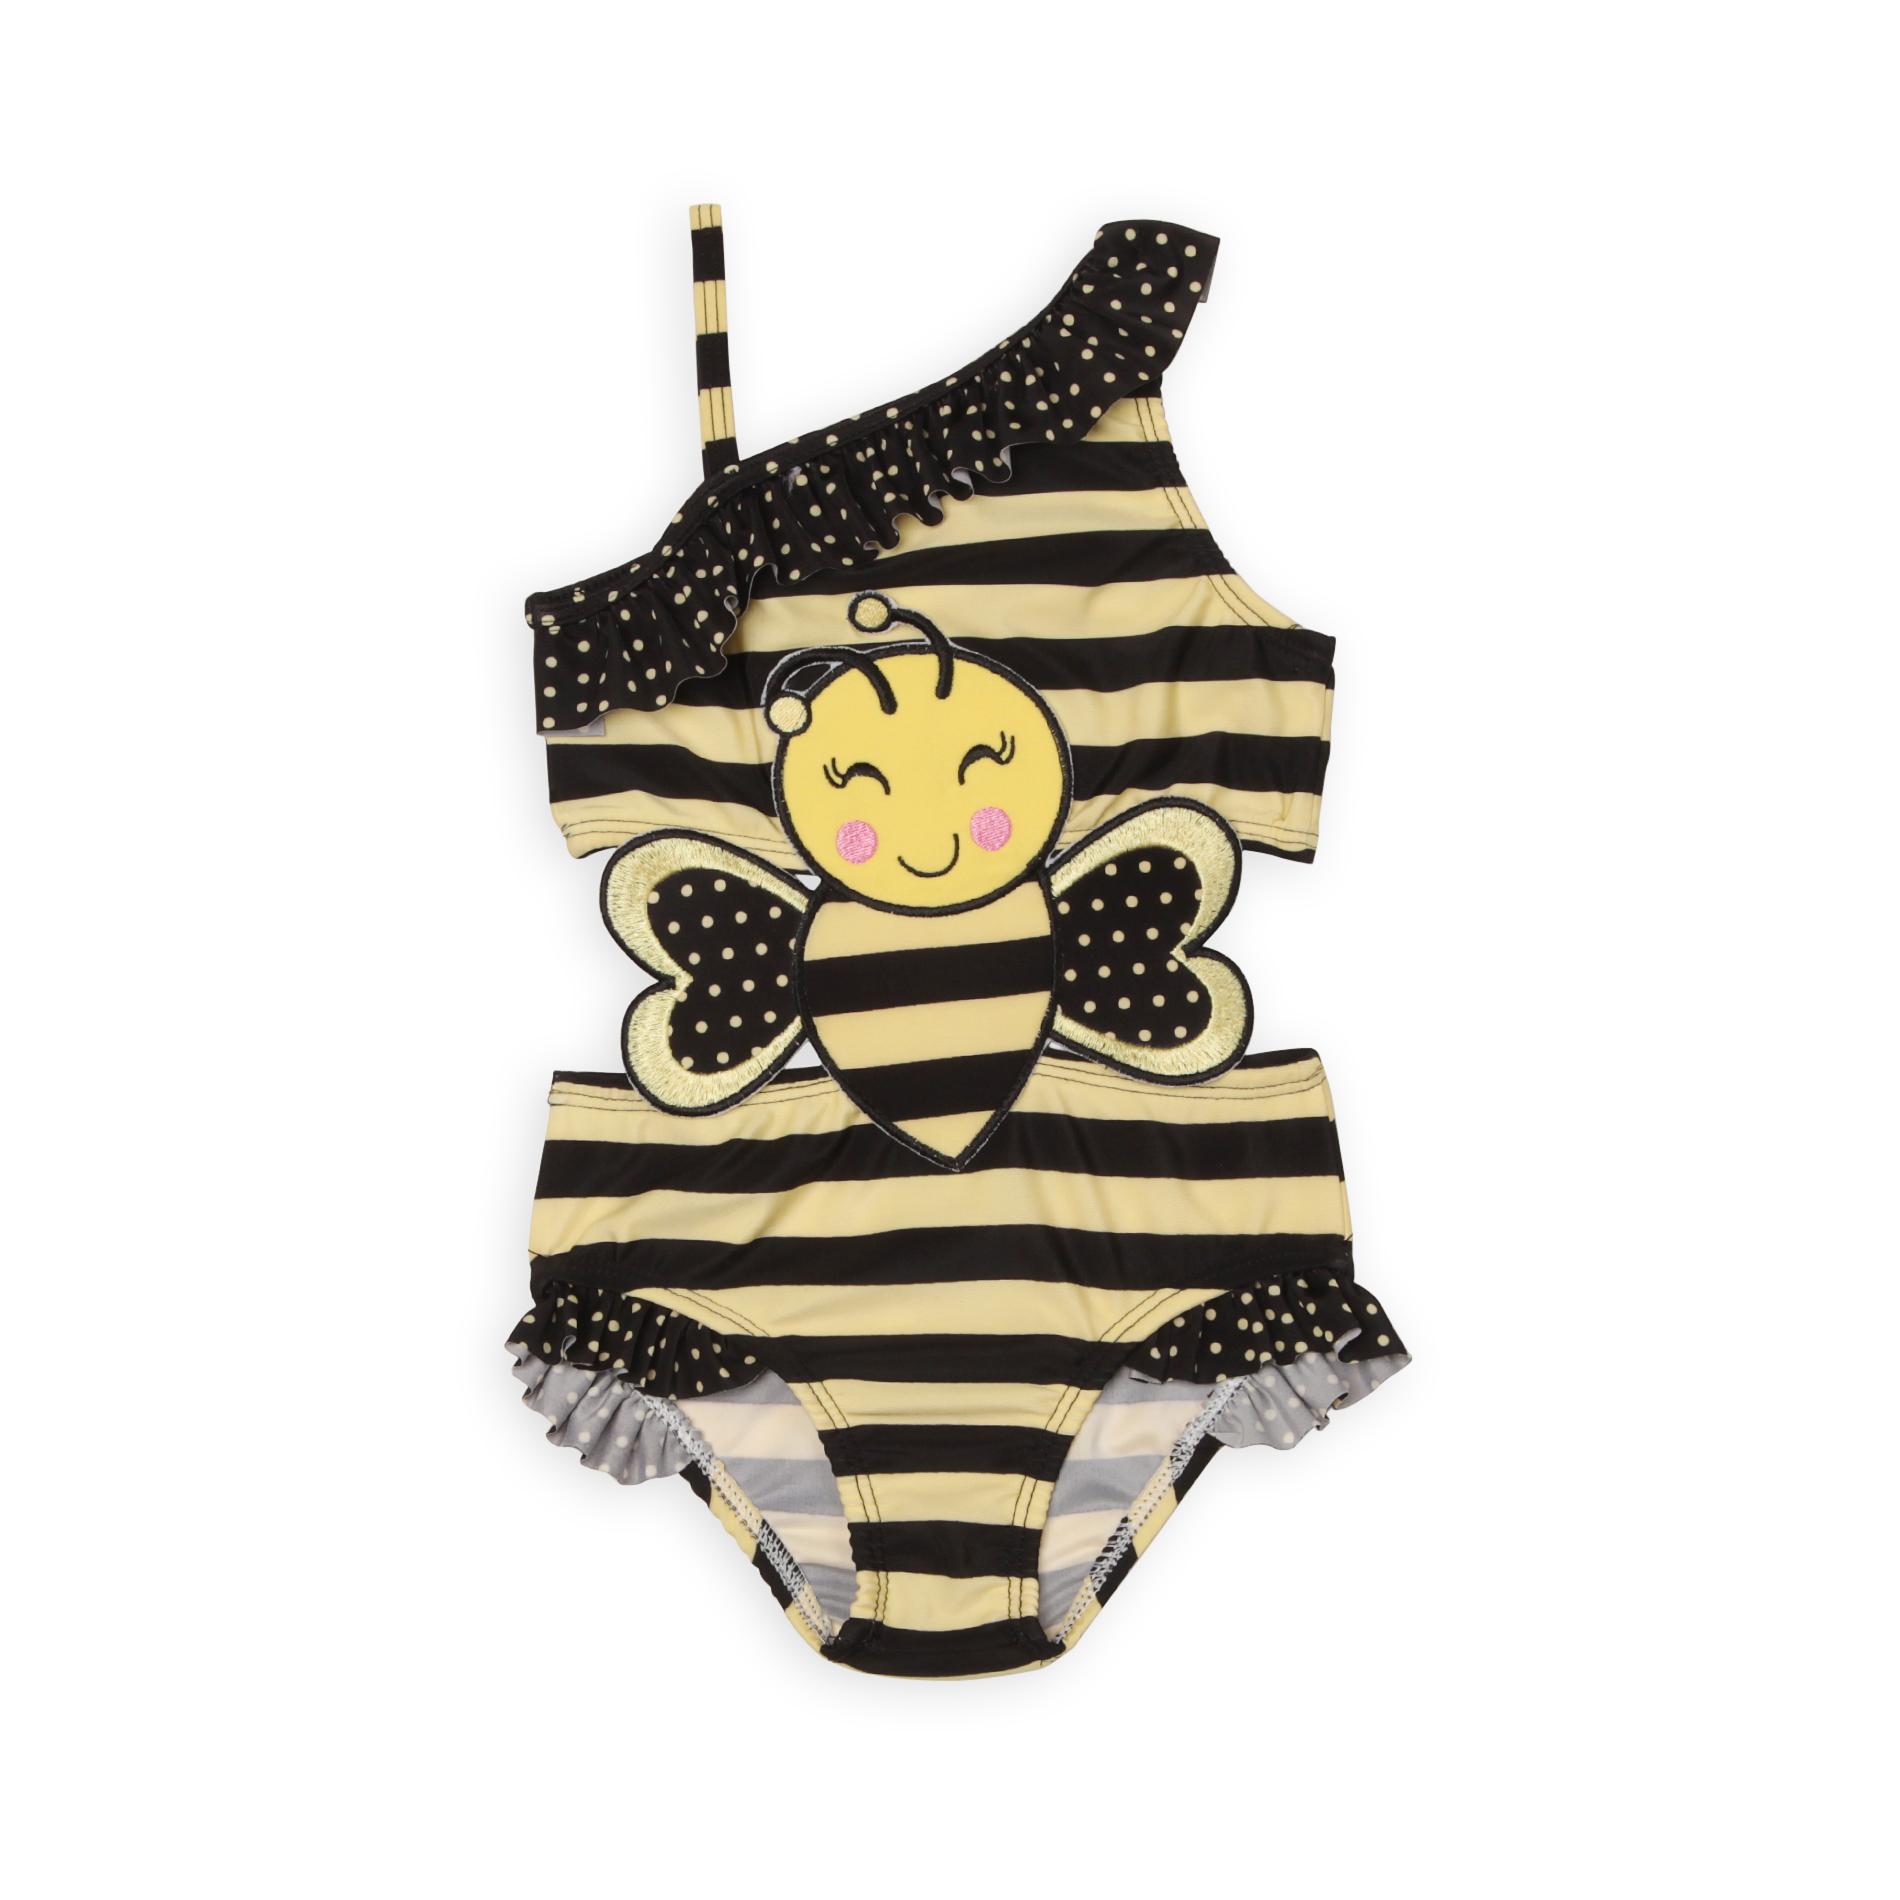 Joe Boxer Infant & Toddler Girl's Asymmetric Monokini Swimsuit - Bee & Striped